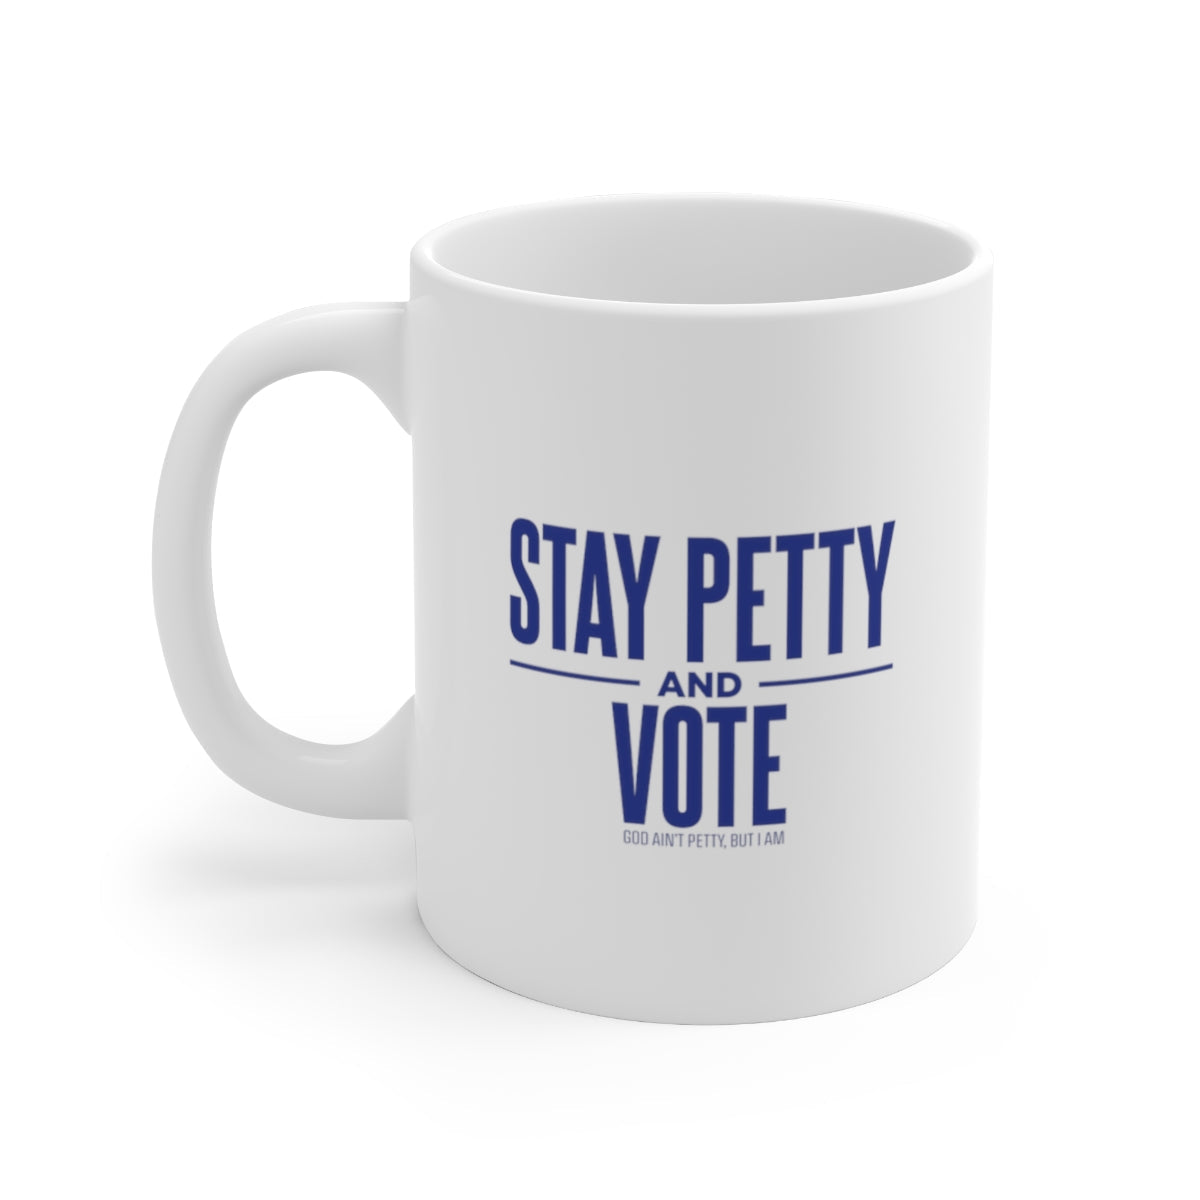 Stay Petty and Vote Mug 11oz (White/Blue)-Mug-The Original God Ain't Petty But I Am